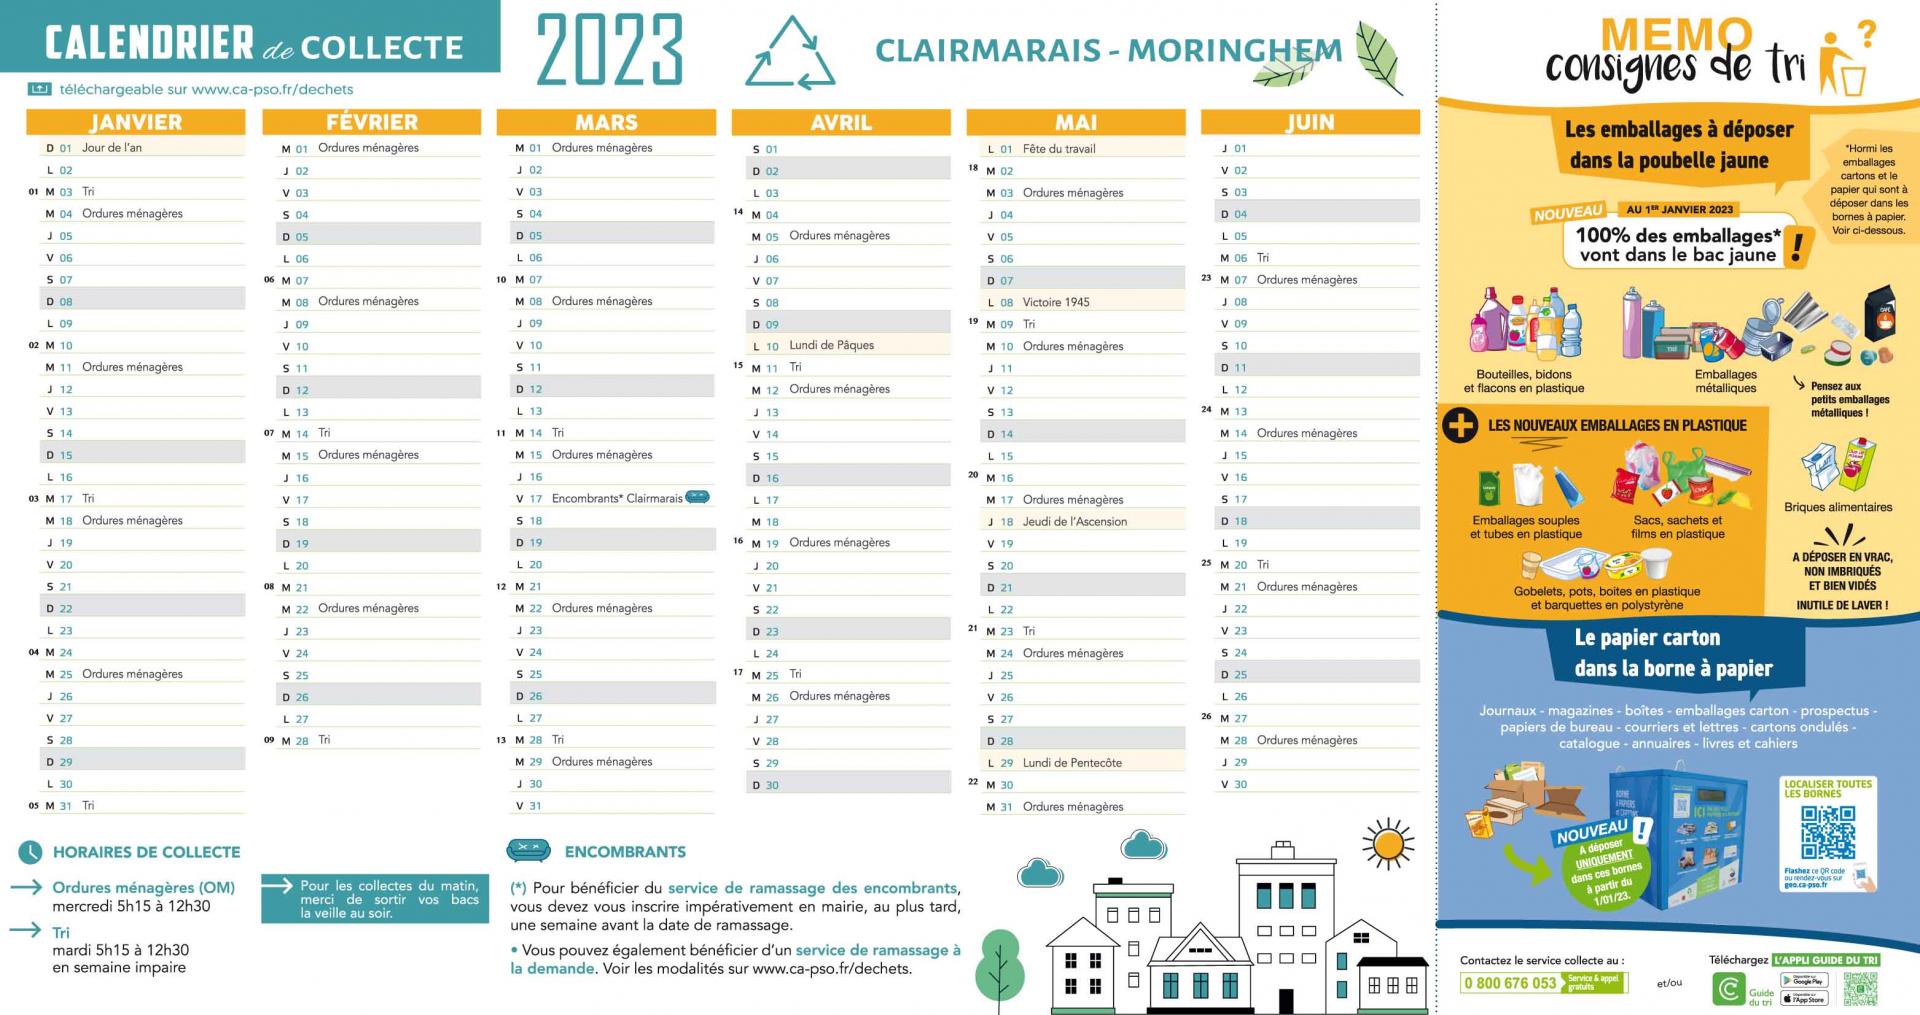 Moringhem calendrier de collecte 2023 1